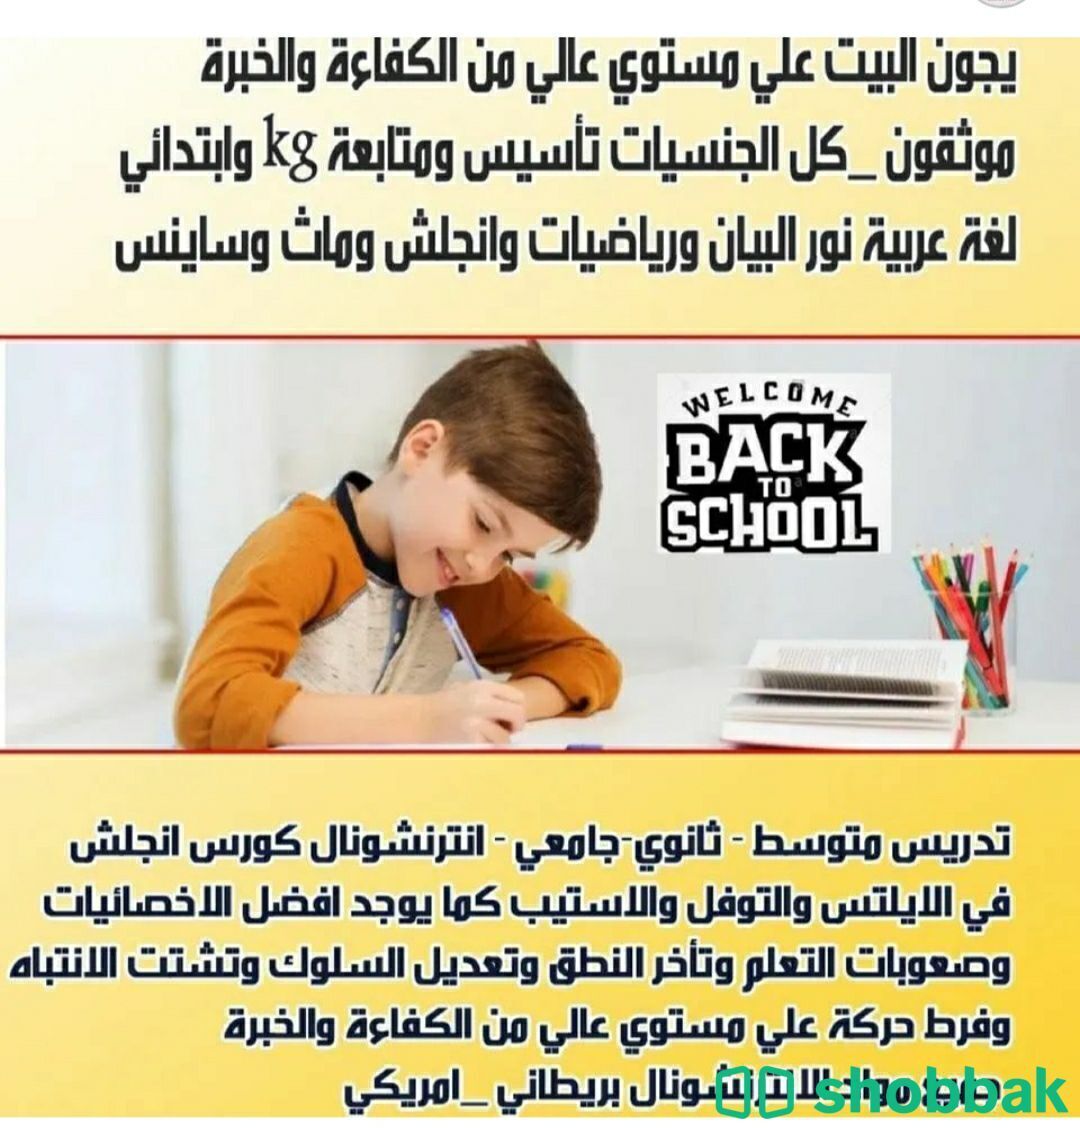 مدرسات خصوصيات ومدرسين Shobbak Saudi Arabia